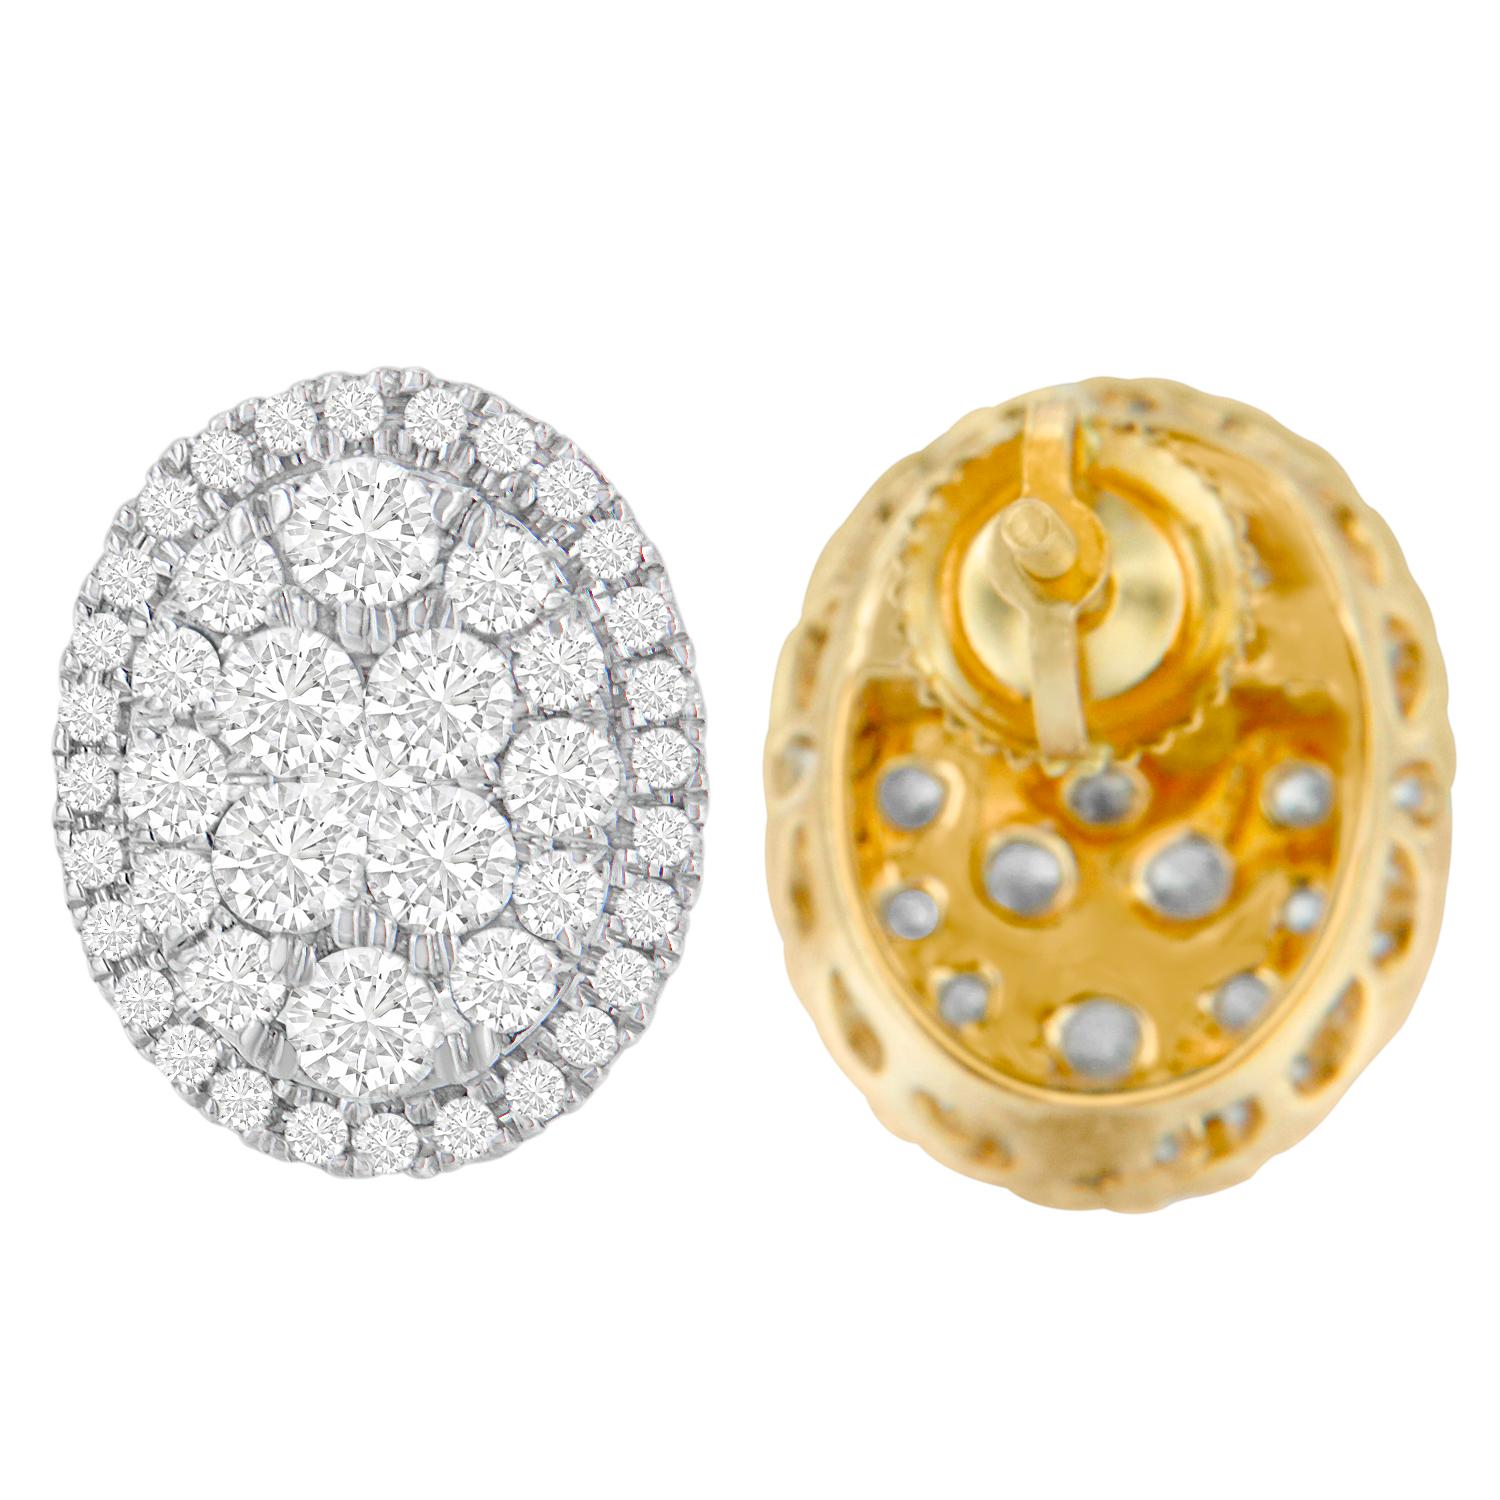 1 carat diamond stud earrings 14k yellow gold